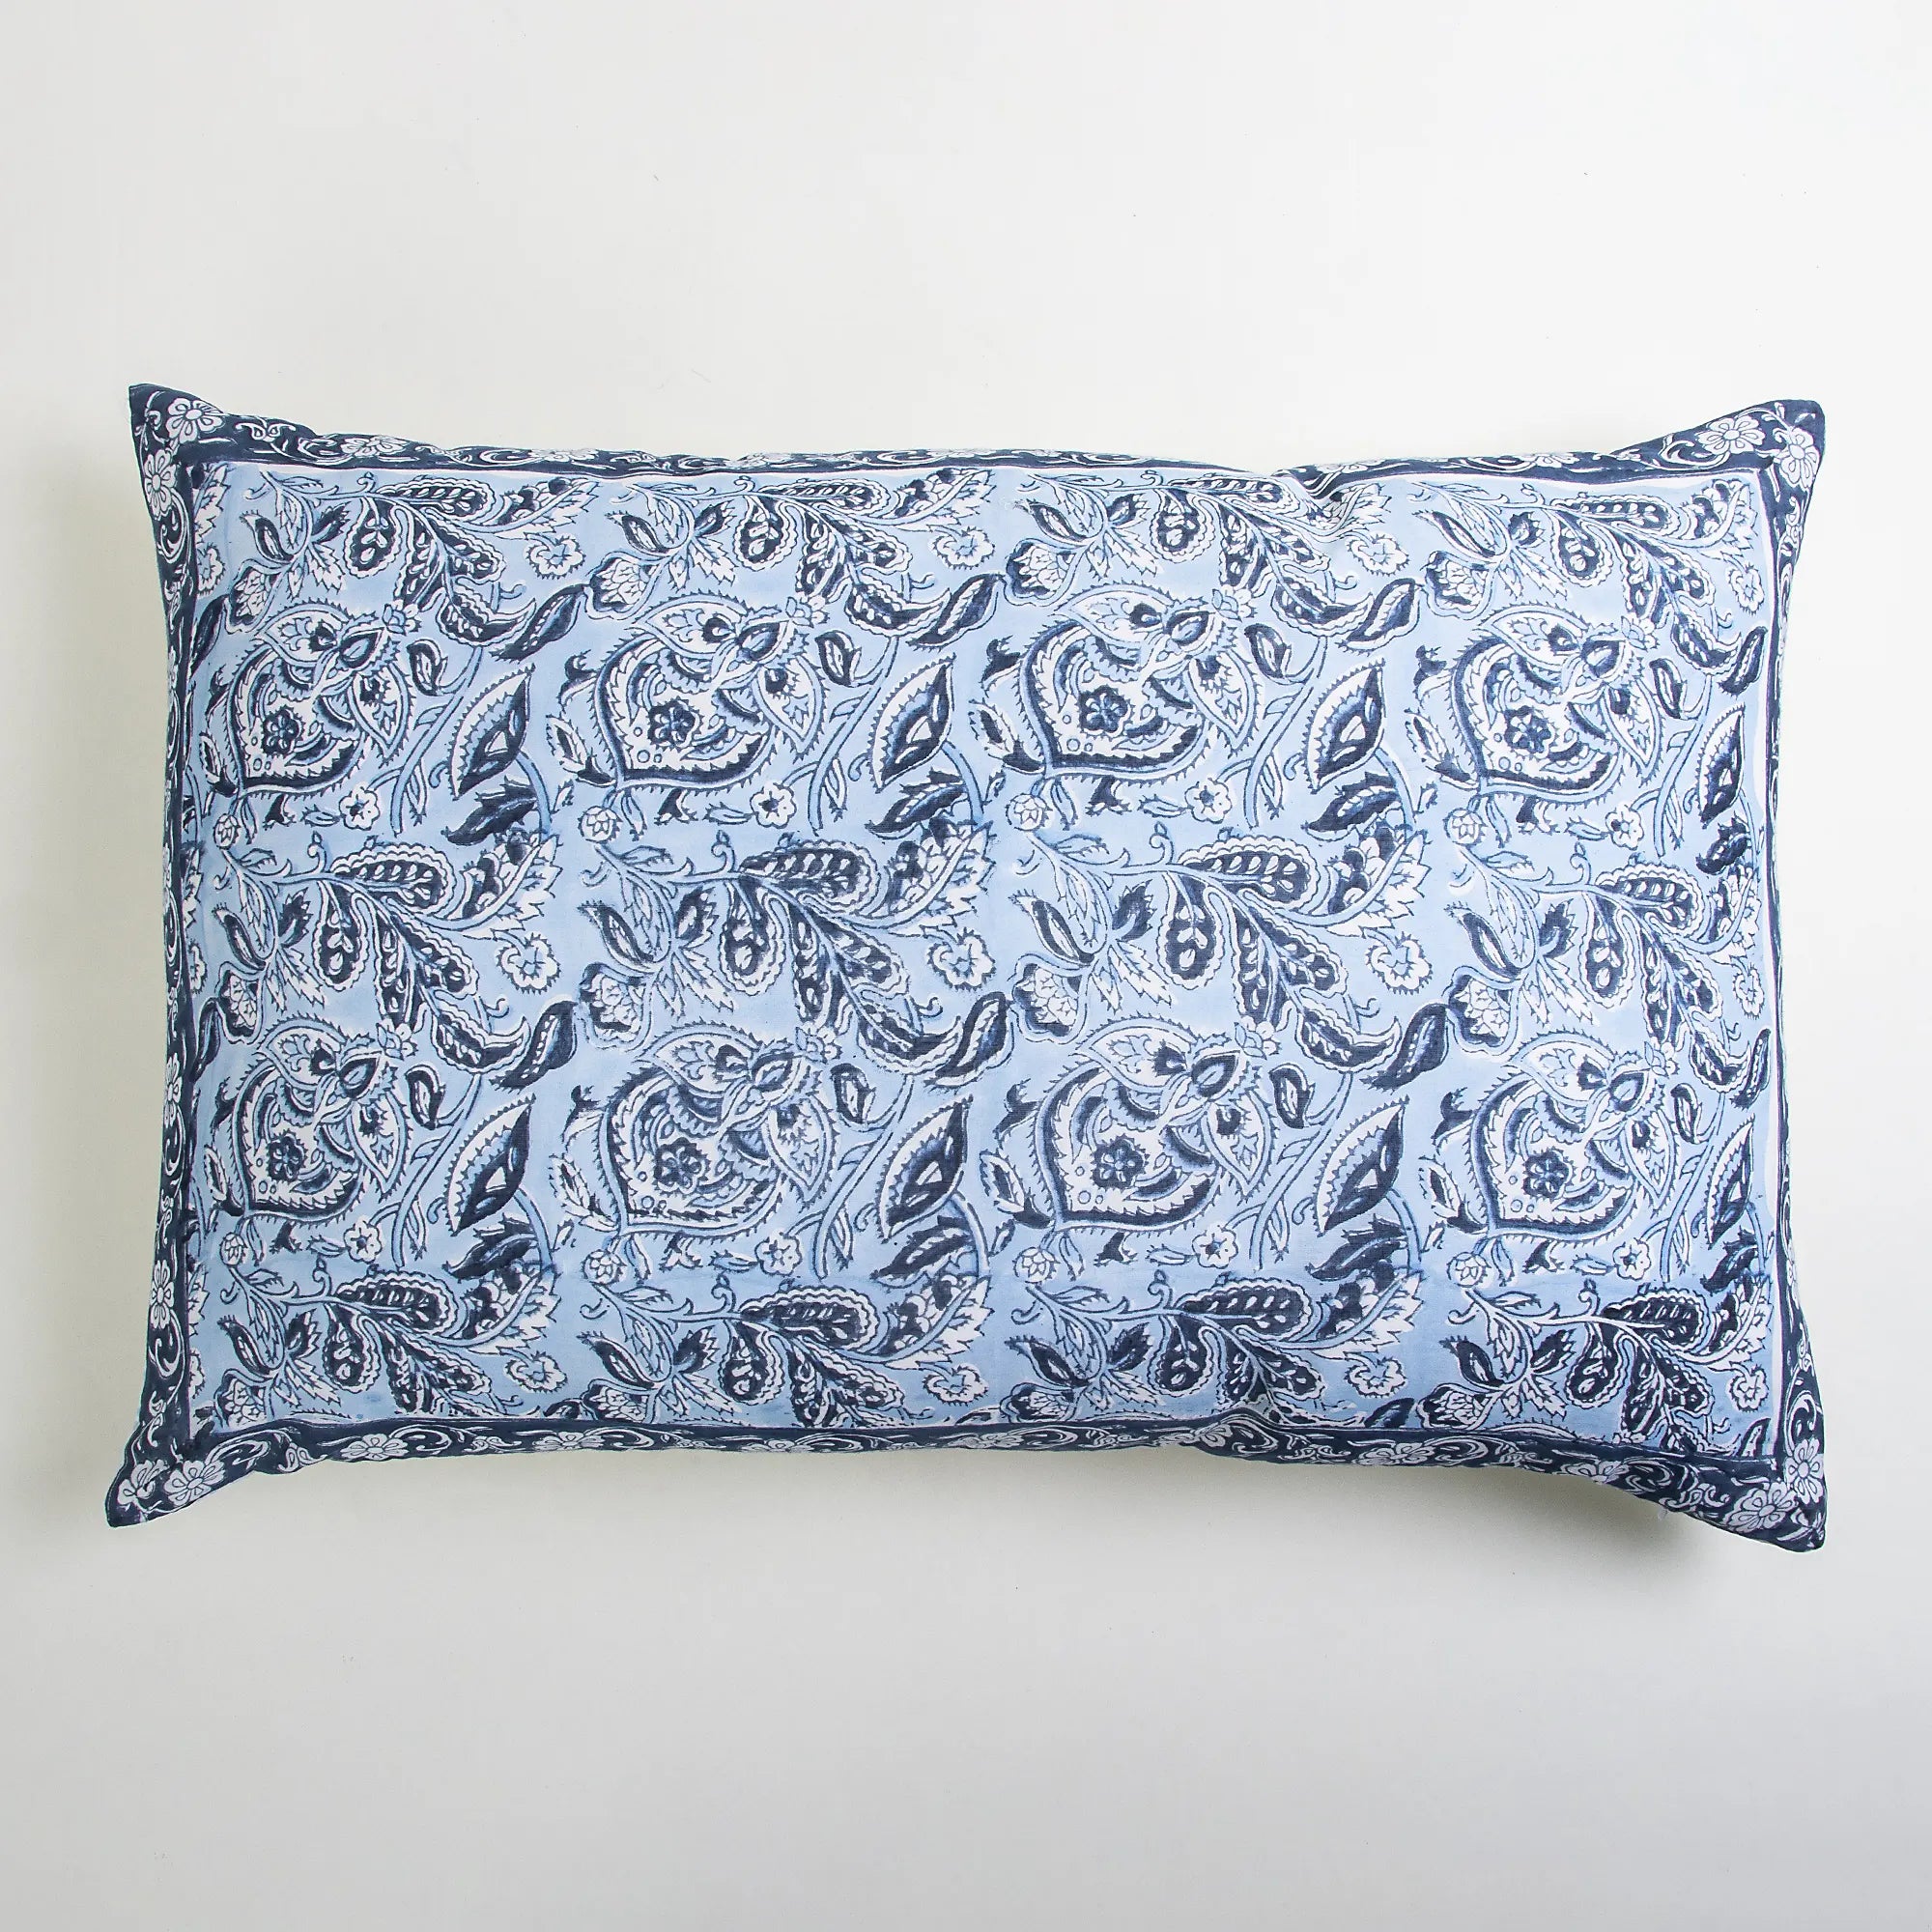 Handmade Flower Printed Cotton Pillow Case